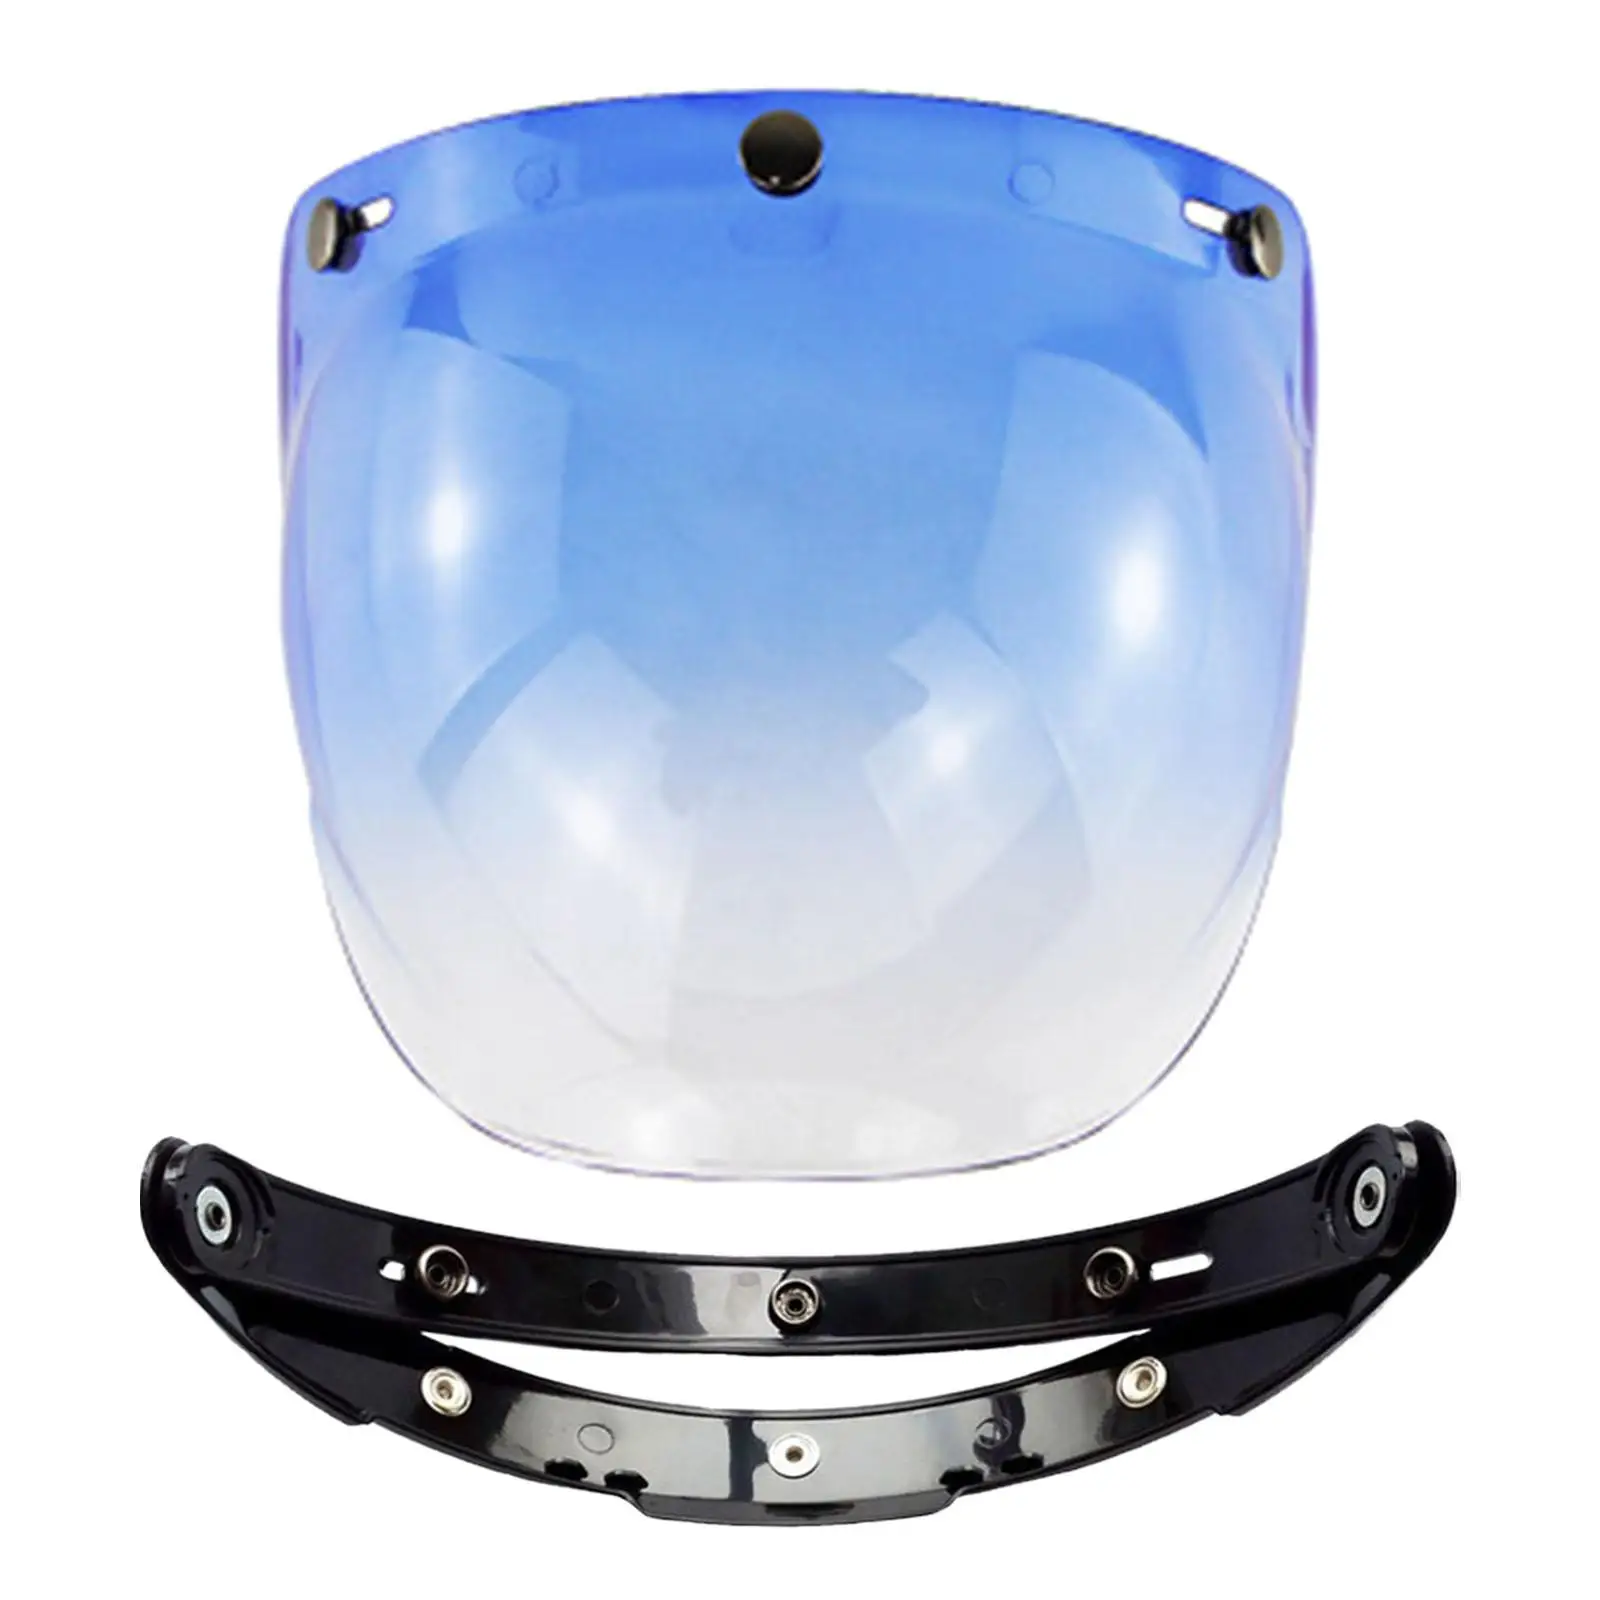 Bubble 3 snap visor shield with visor base attachment, fits open helmets